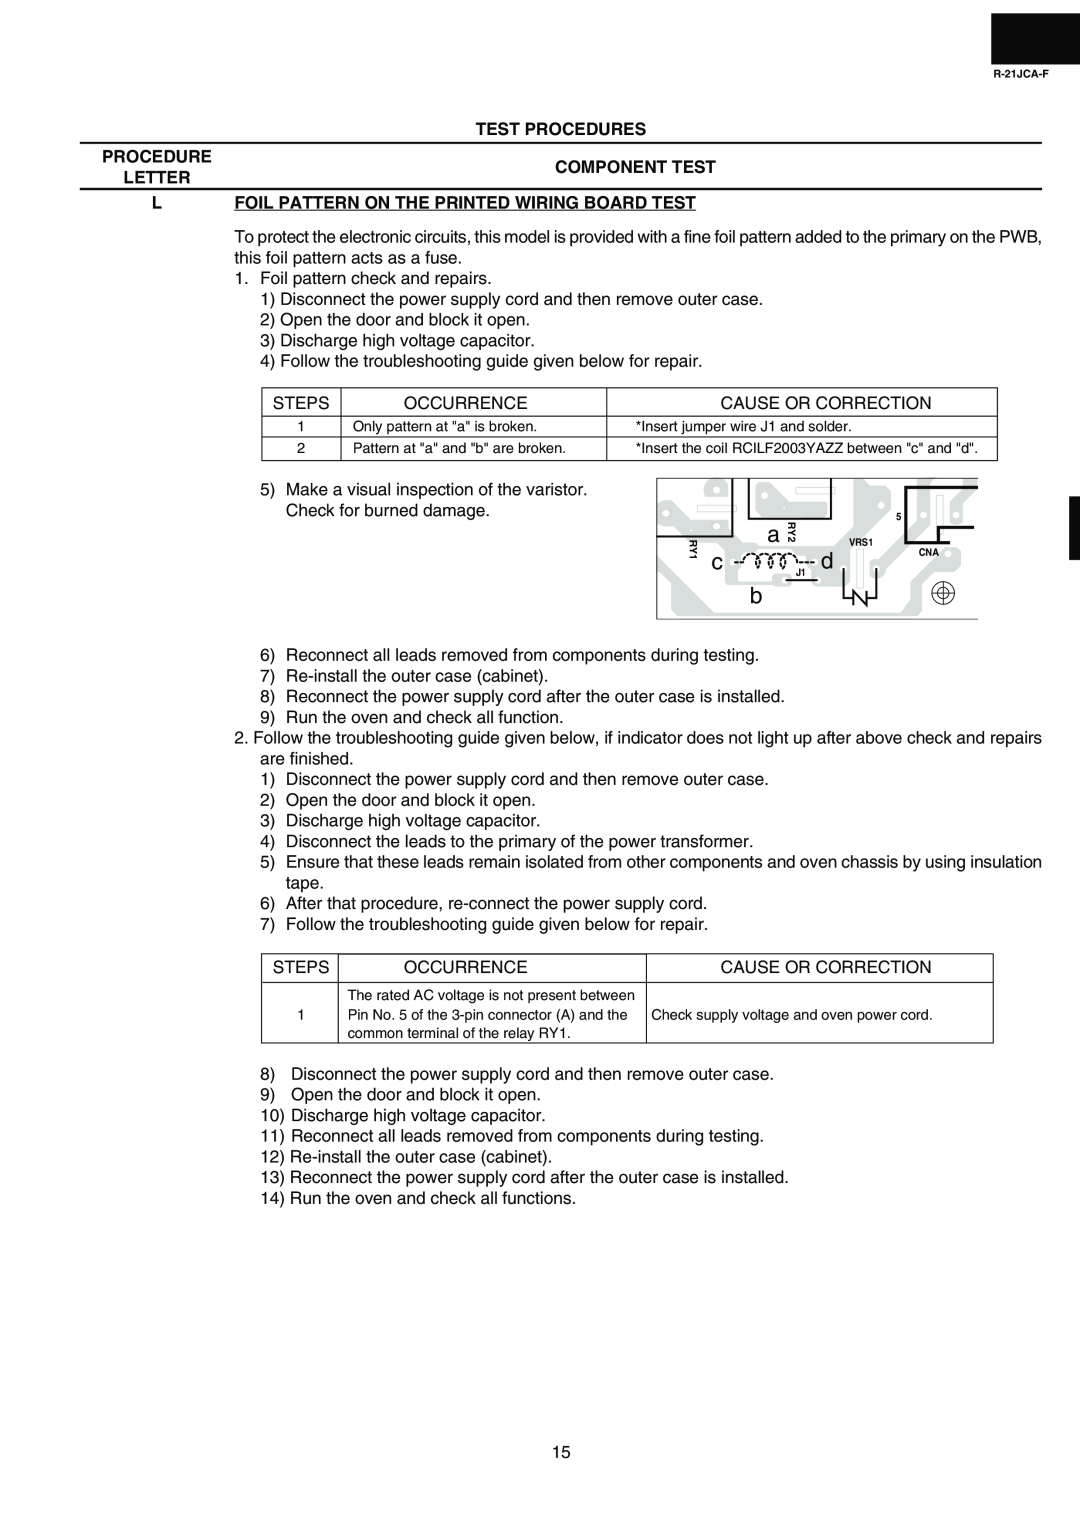 Sharp R-21JCA-F Test Procedures Procedure, Letter, Component Test, L Foil Pattern On The Printed Wiring Board Test 